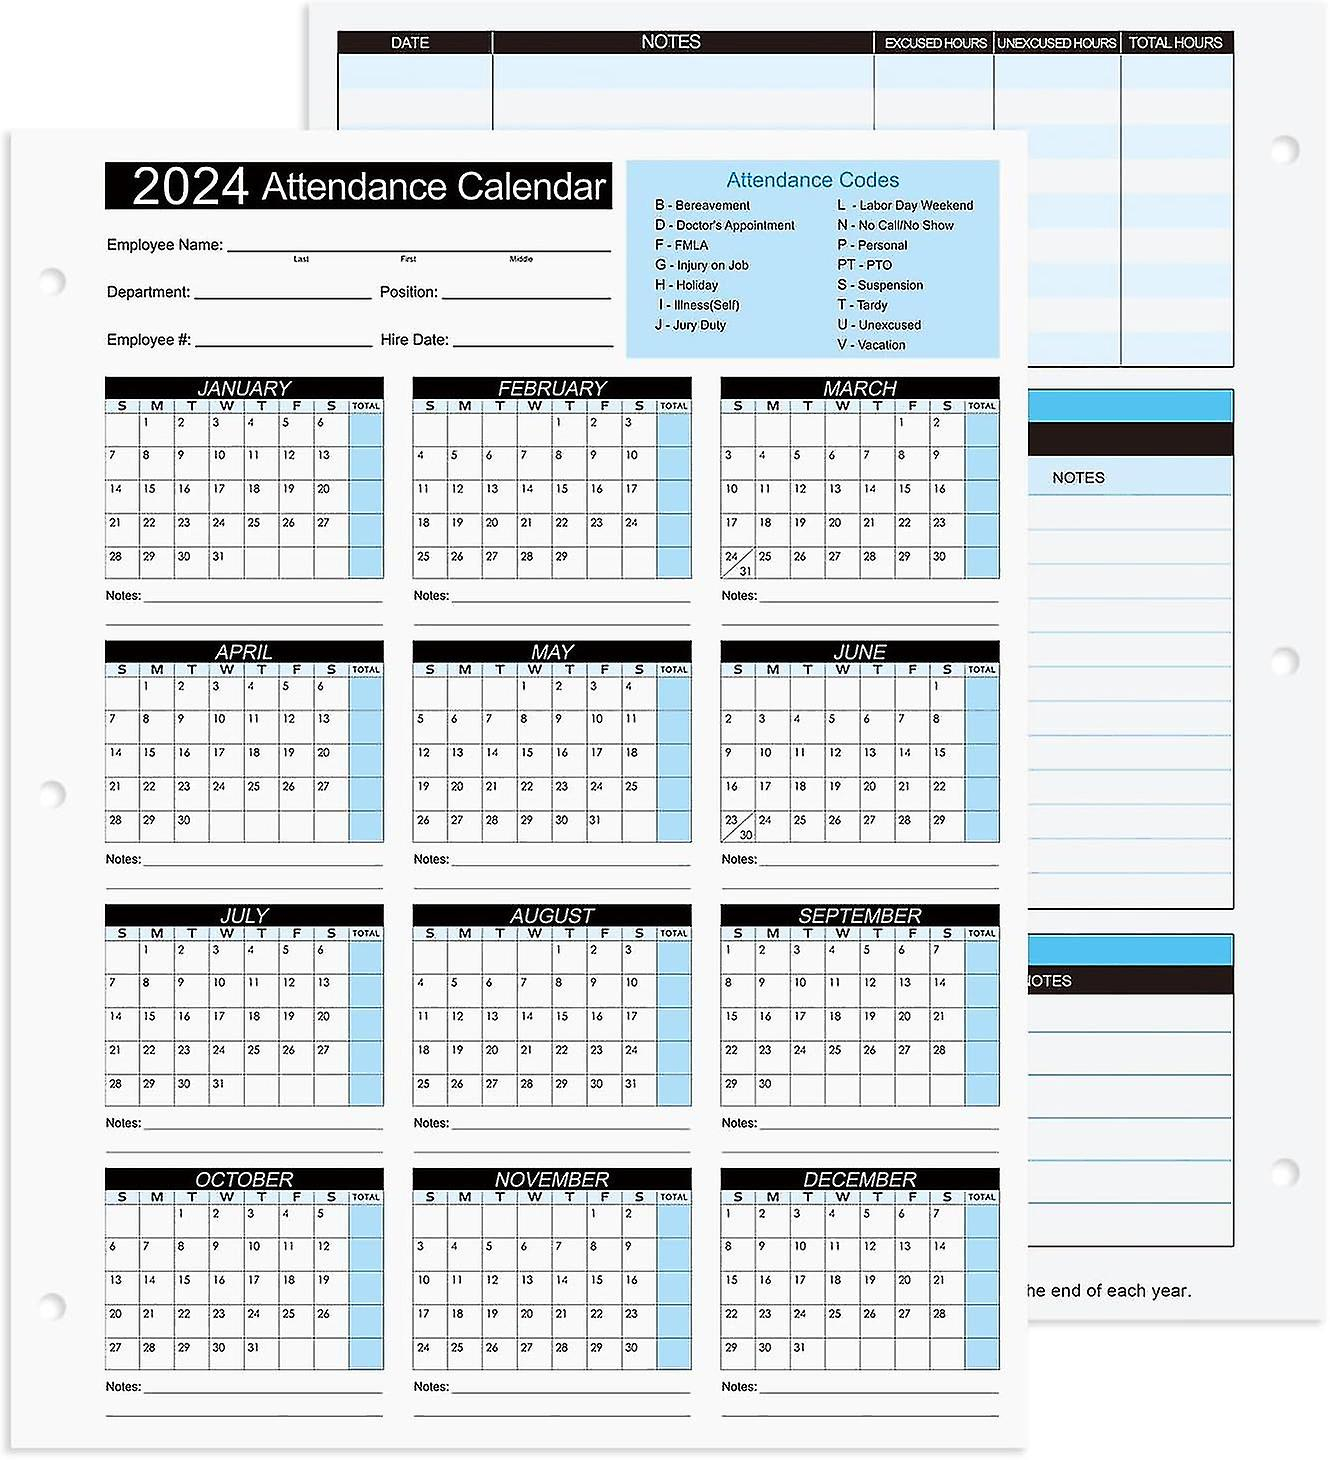 2024 Attendance Calendar Work Tracker - Cards On 8.5 X 11 in 2024 Attendance Calendar Cards